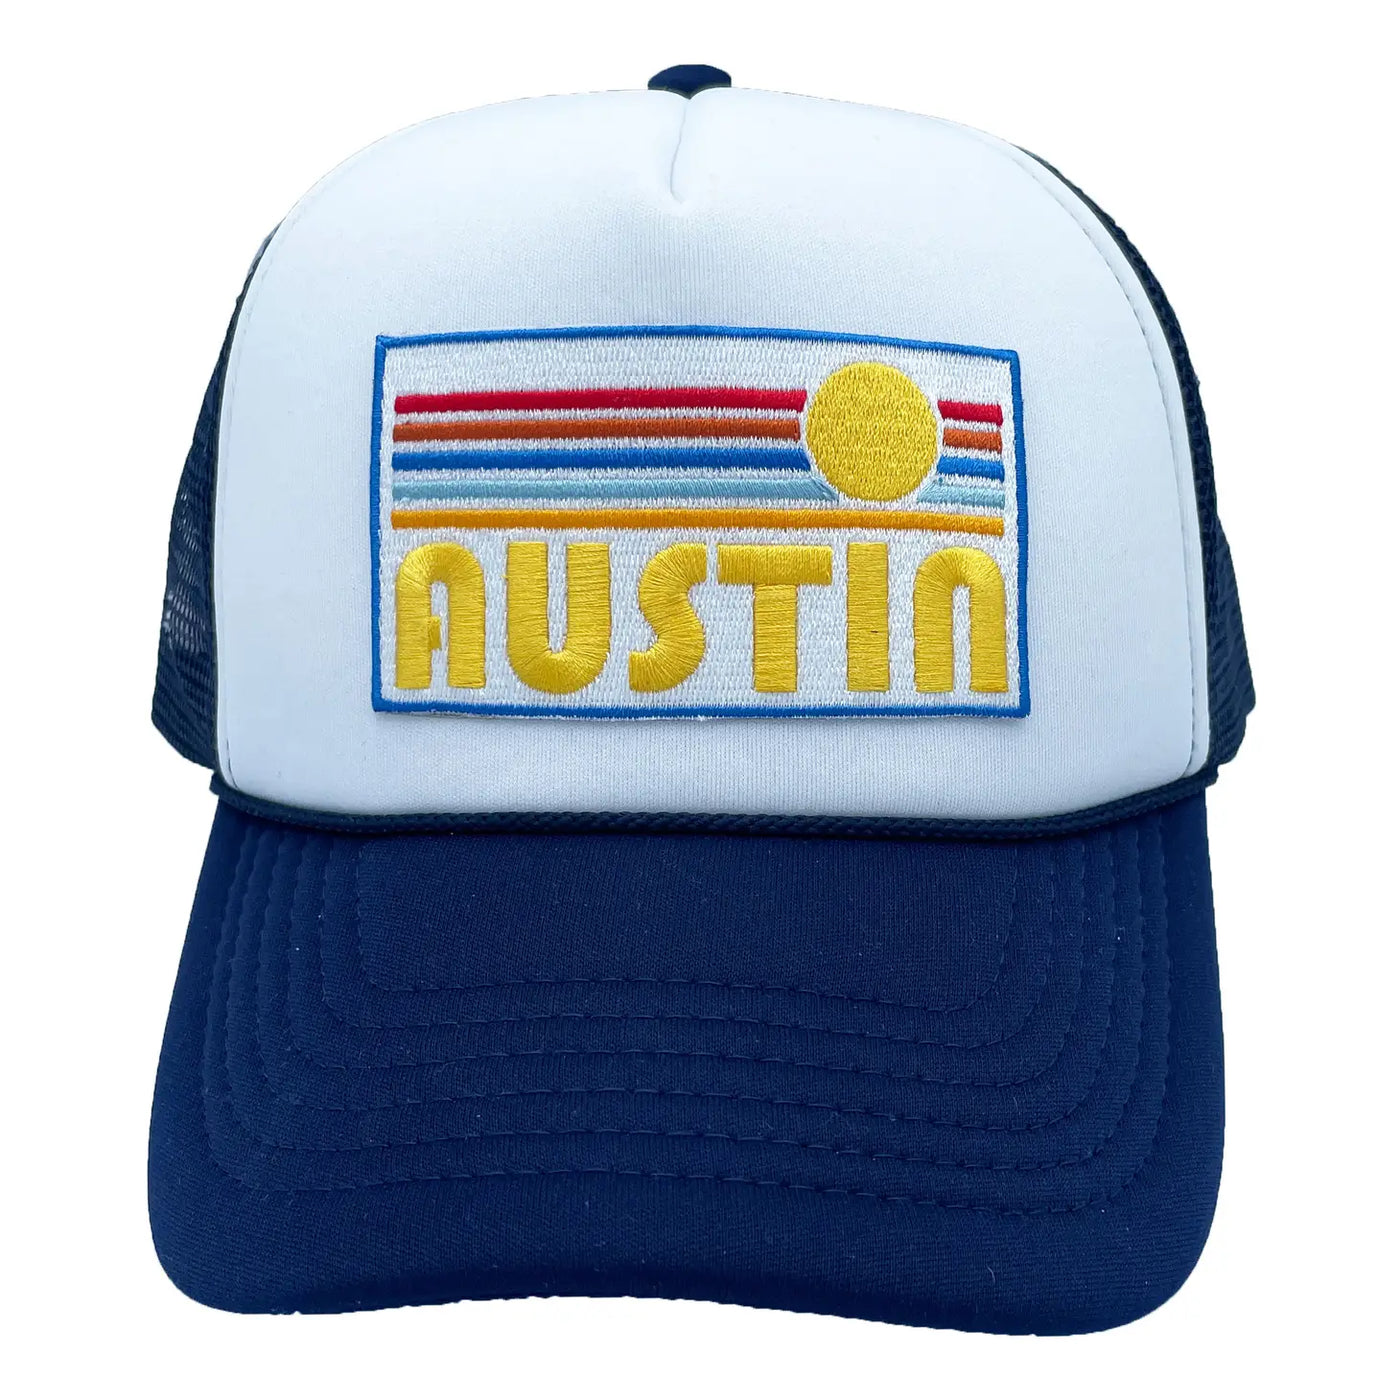 Austin, Texas Trucker Hat - Retro